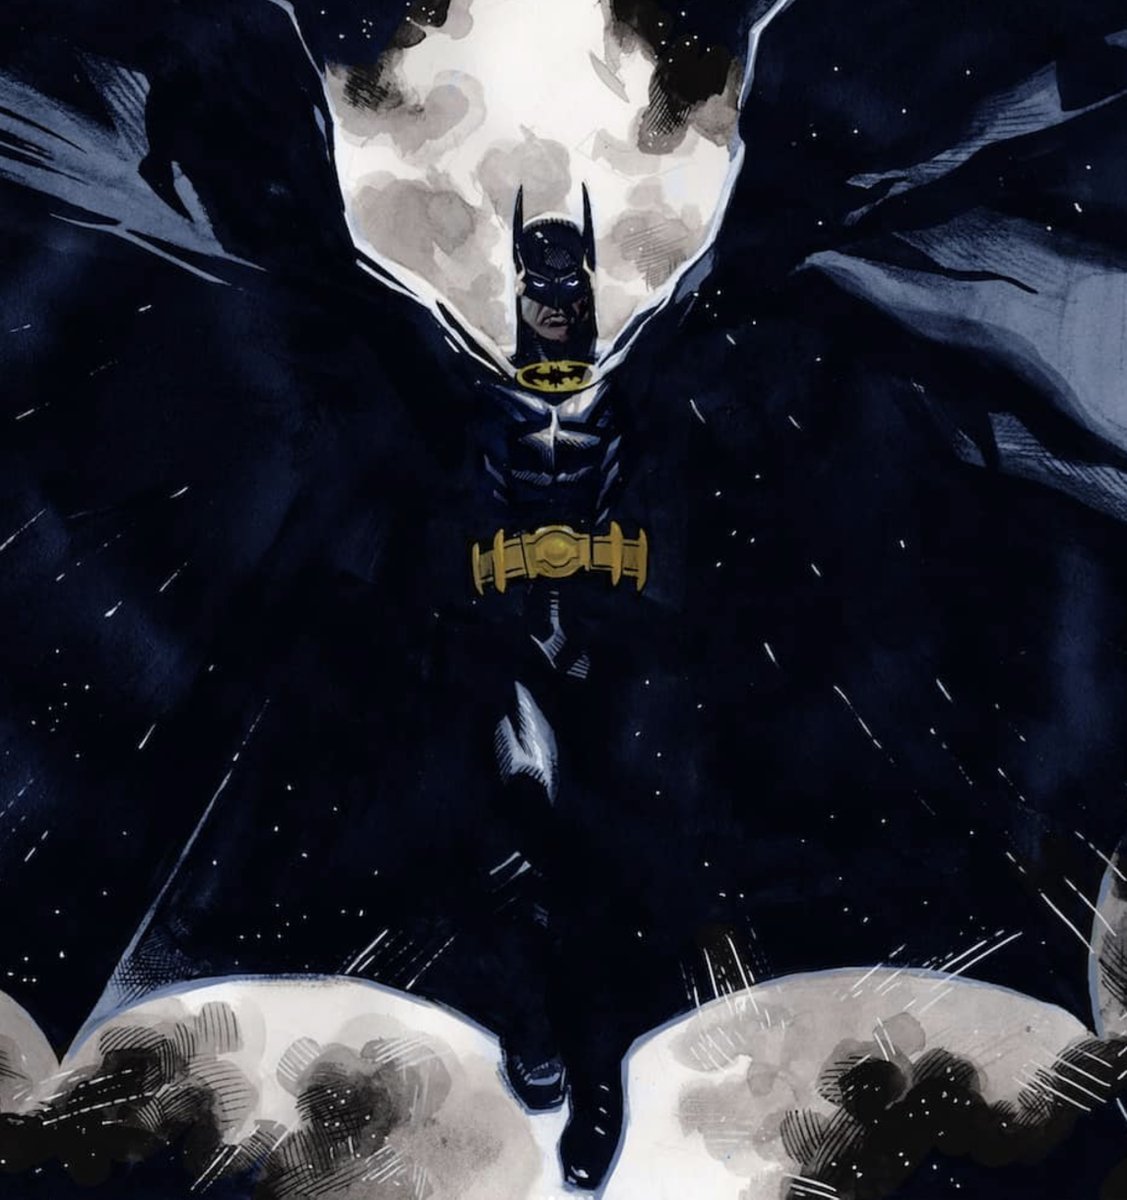 Michael Keaton Batman
Artwork by @LagartoMurciano